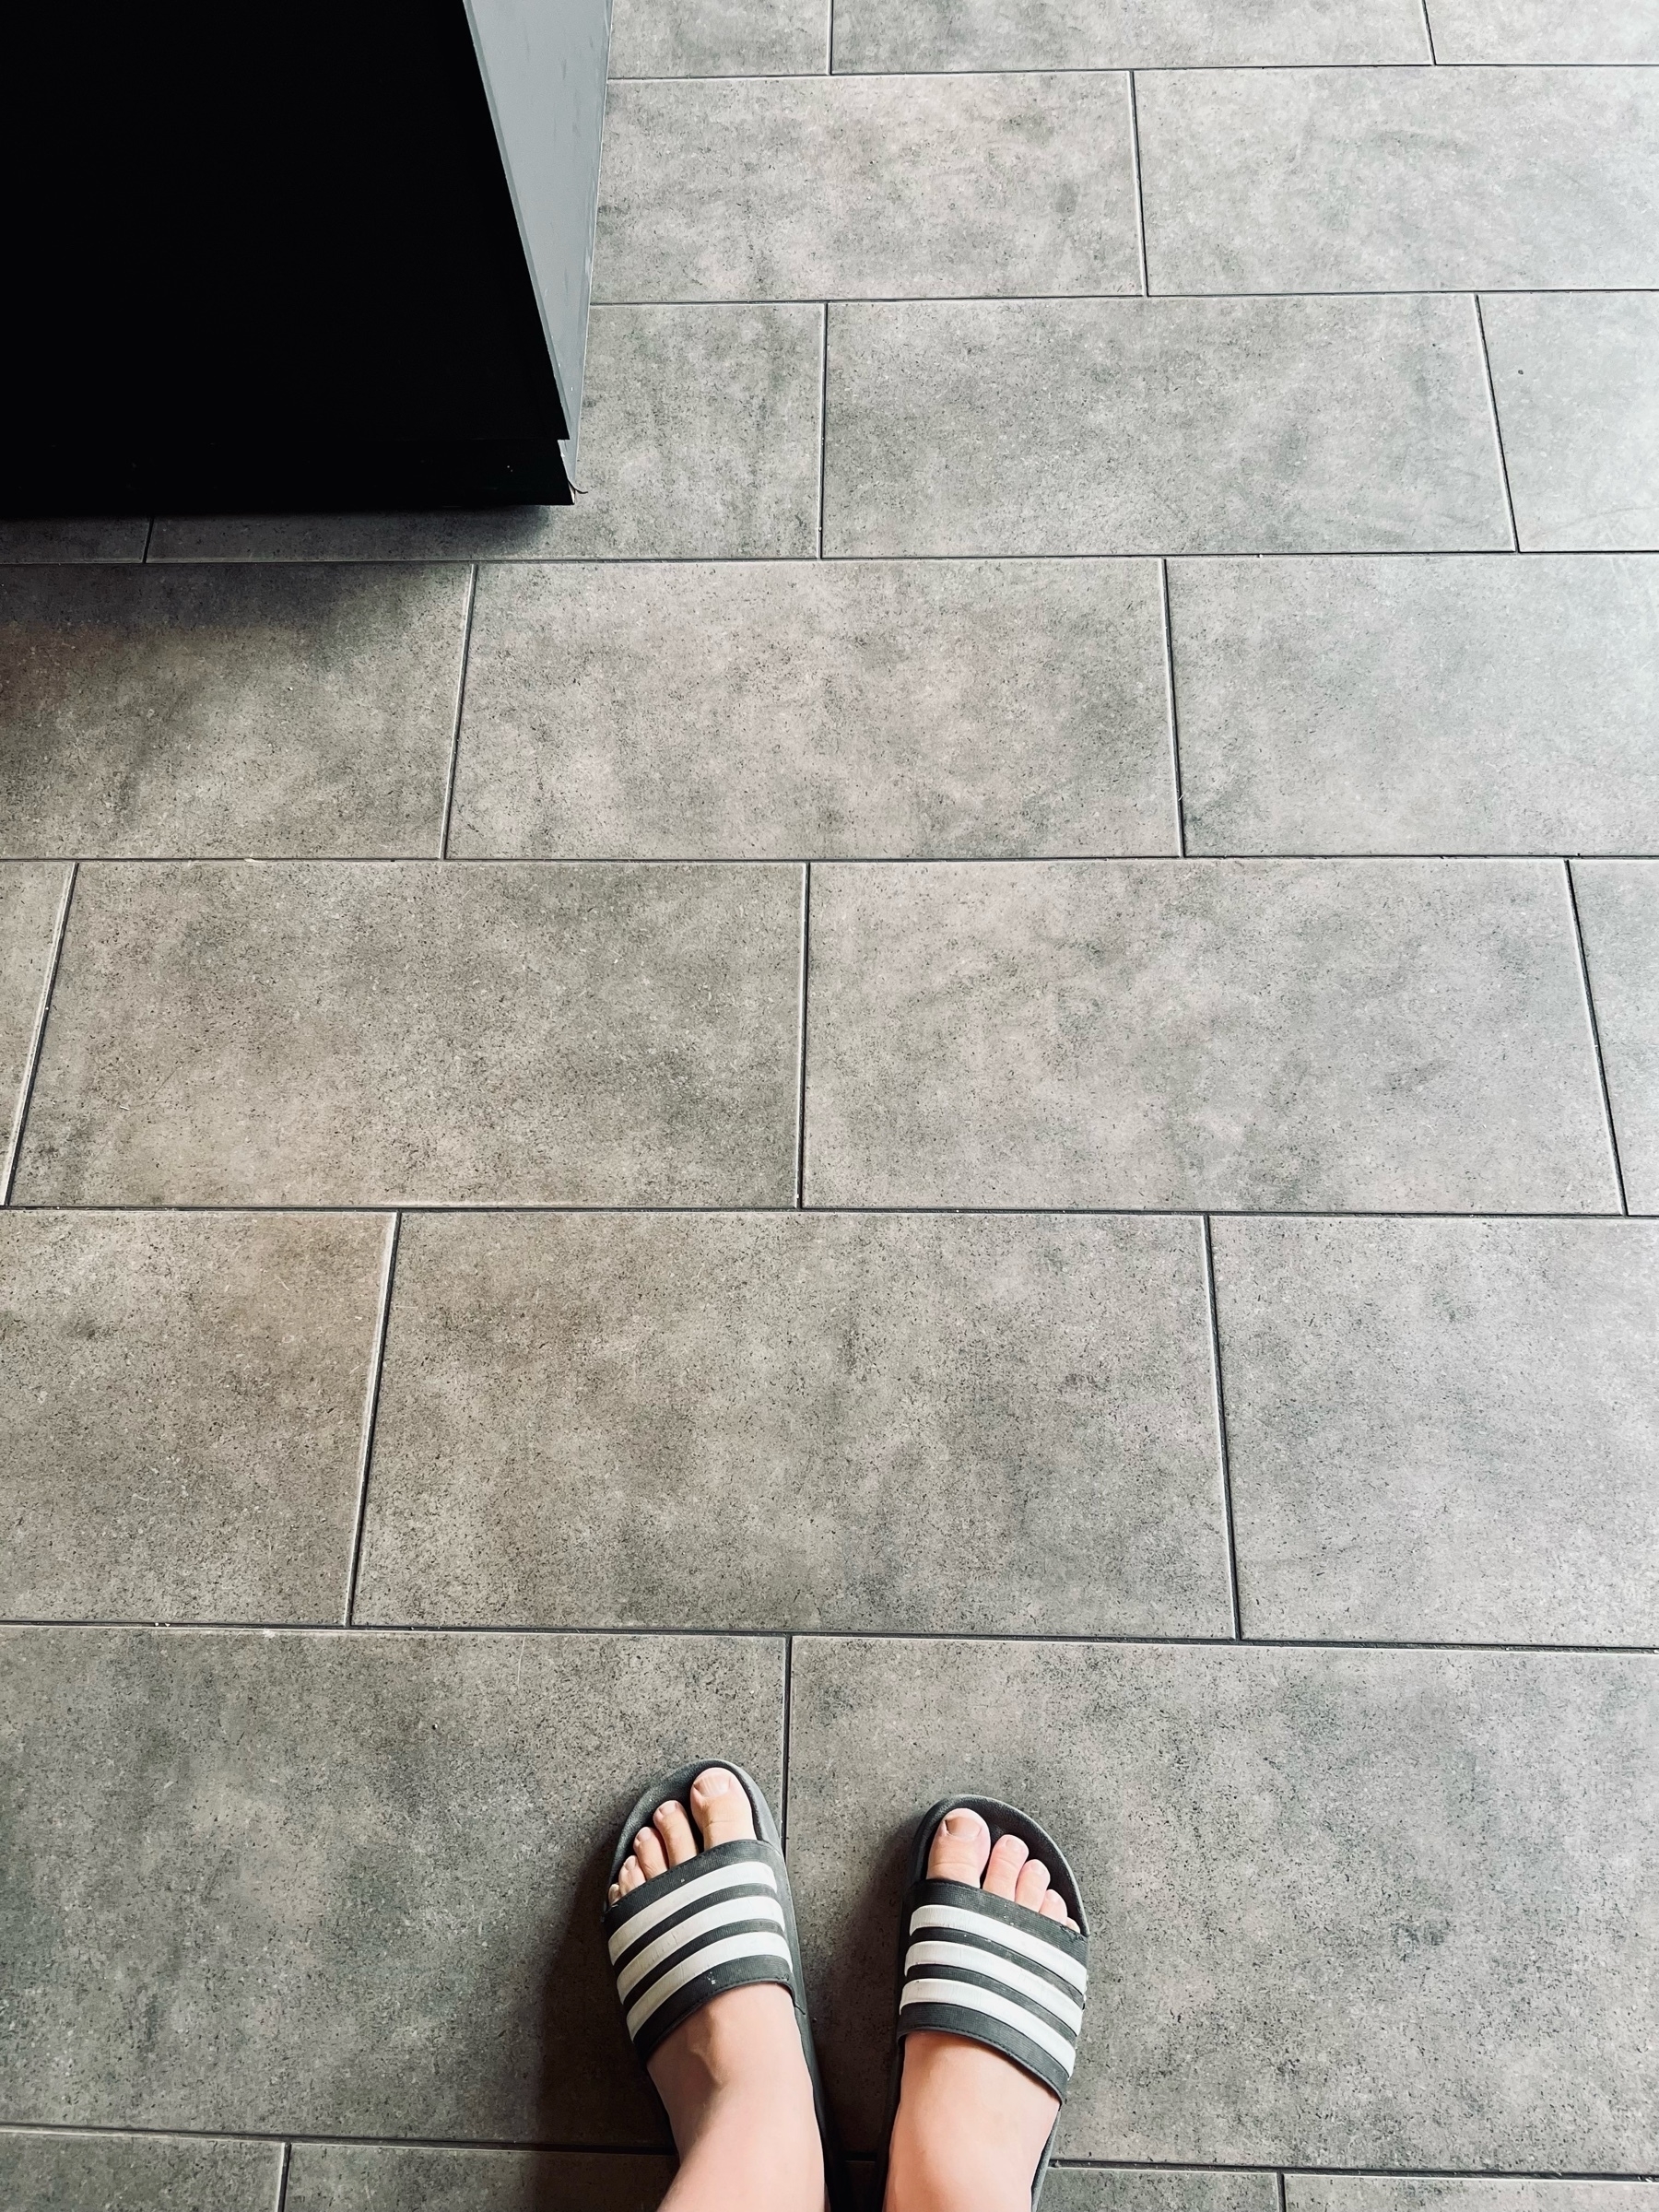 floor of a coffee shop + my feet